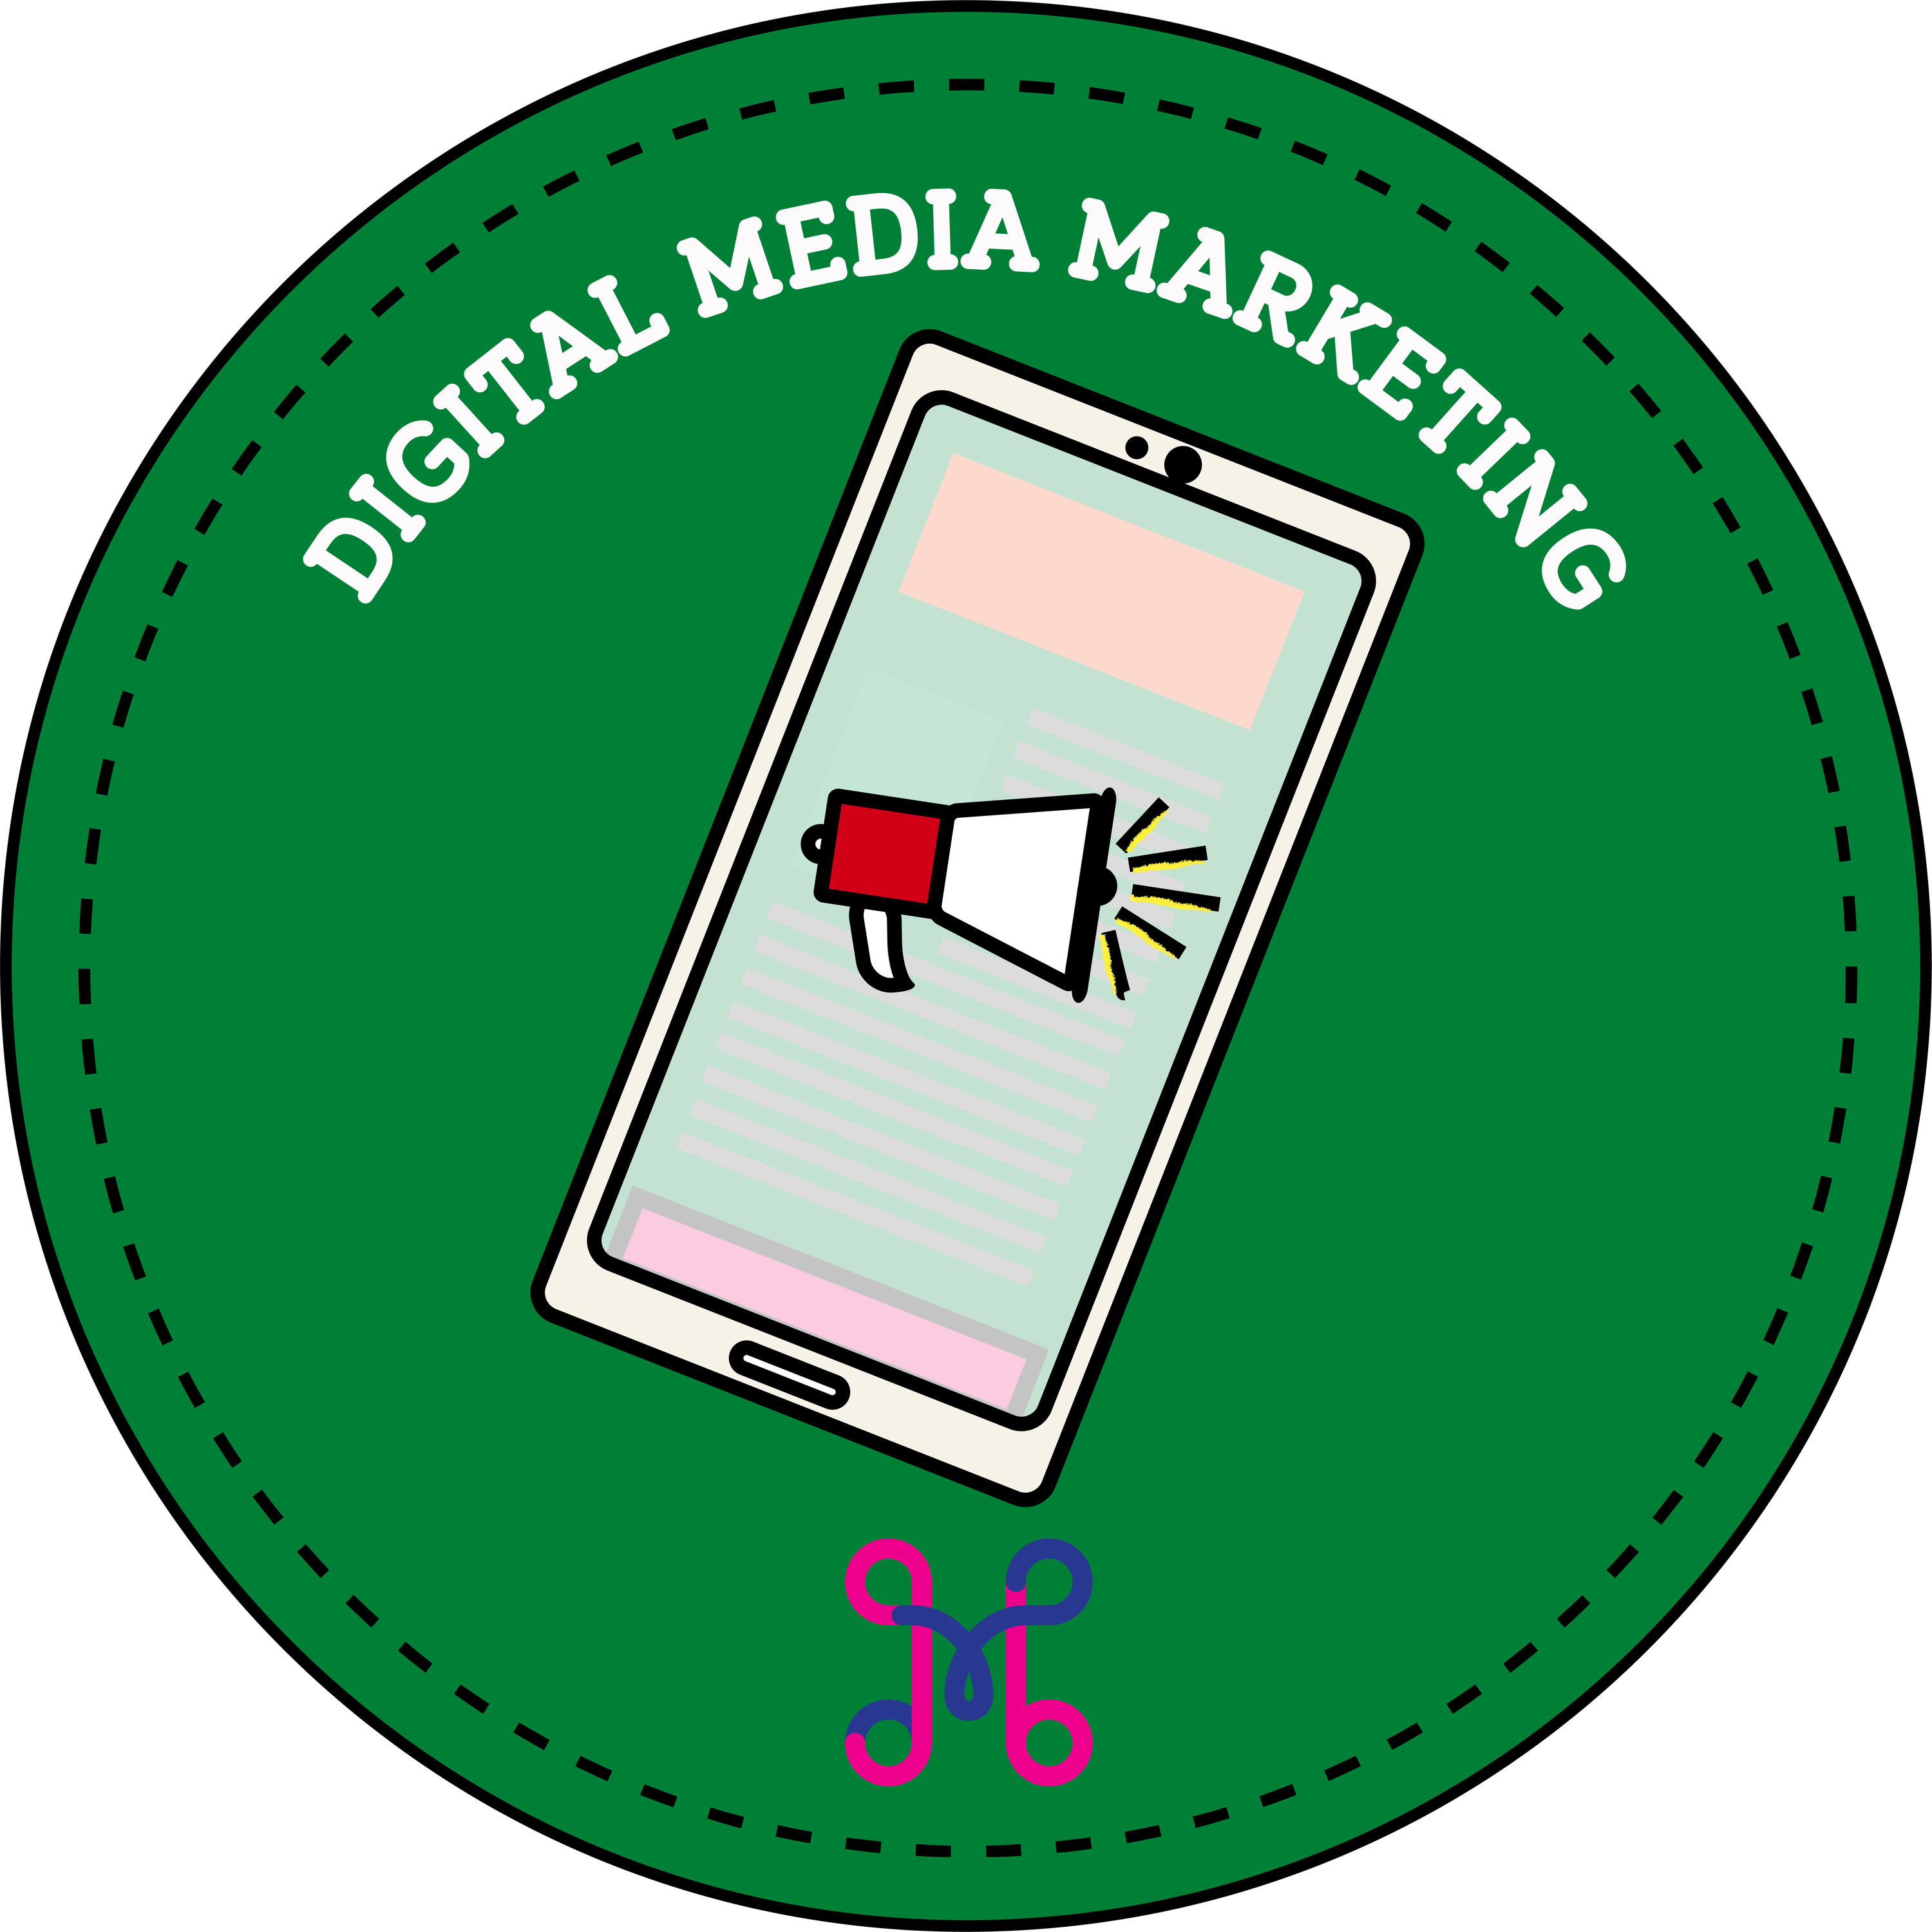 digital media marketing badge